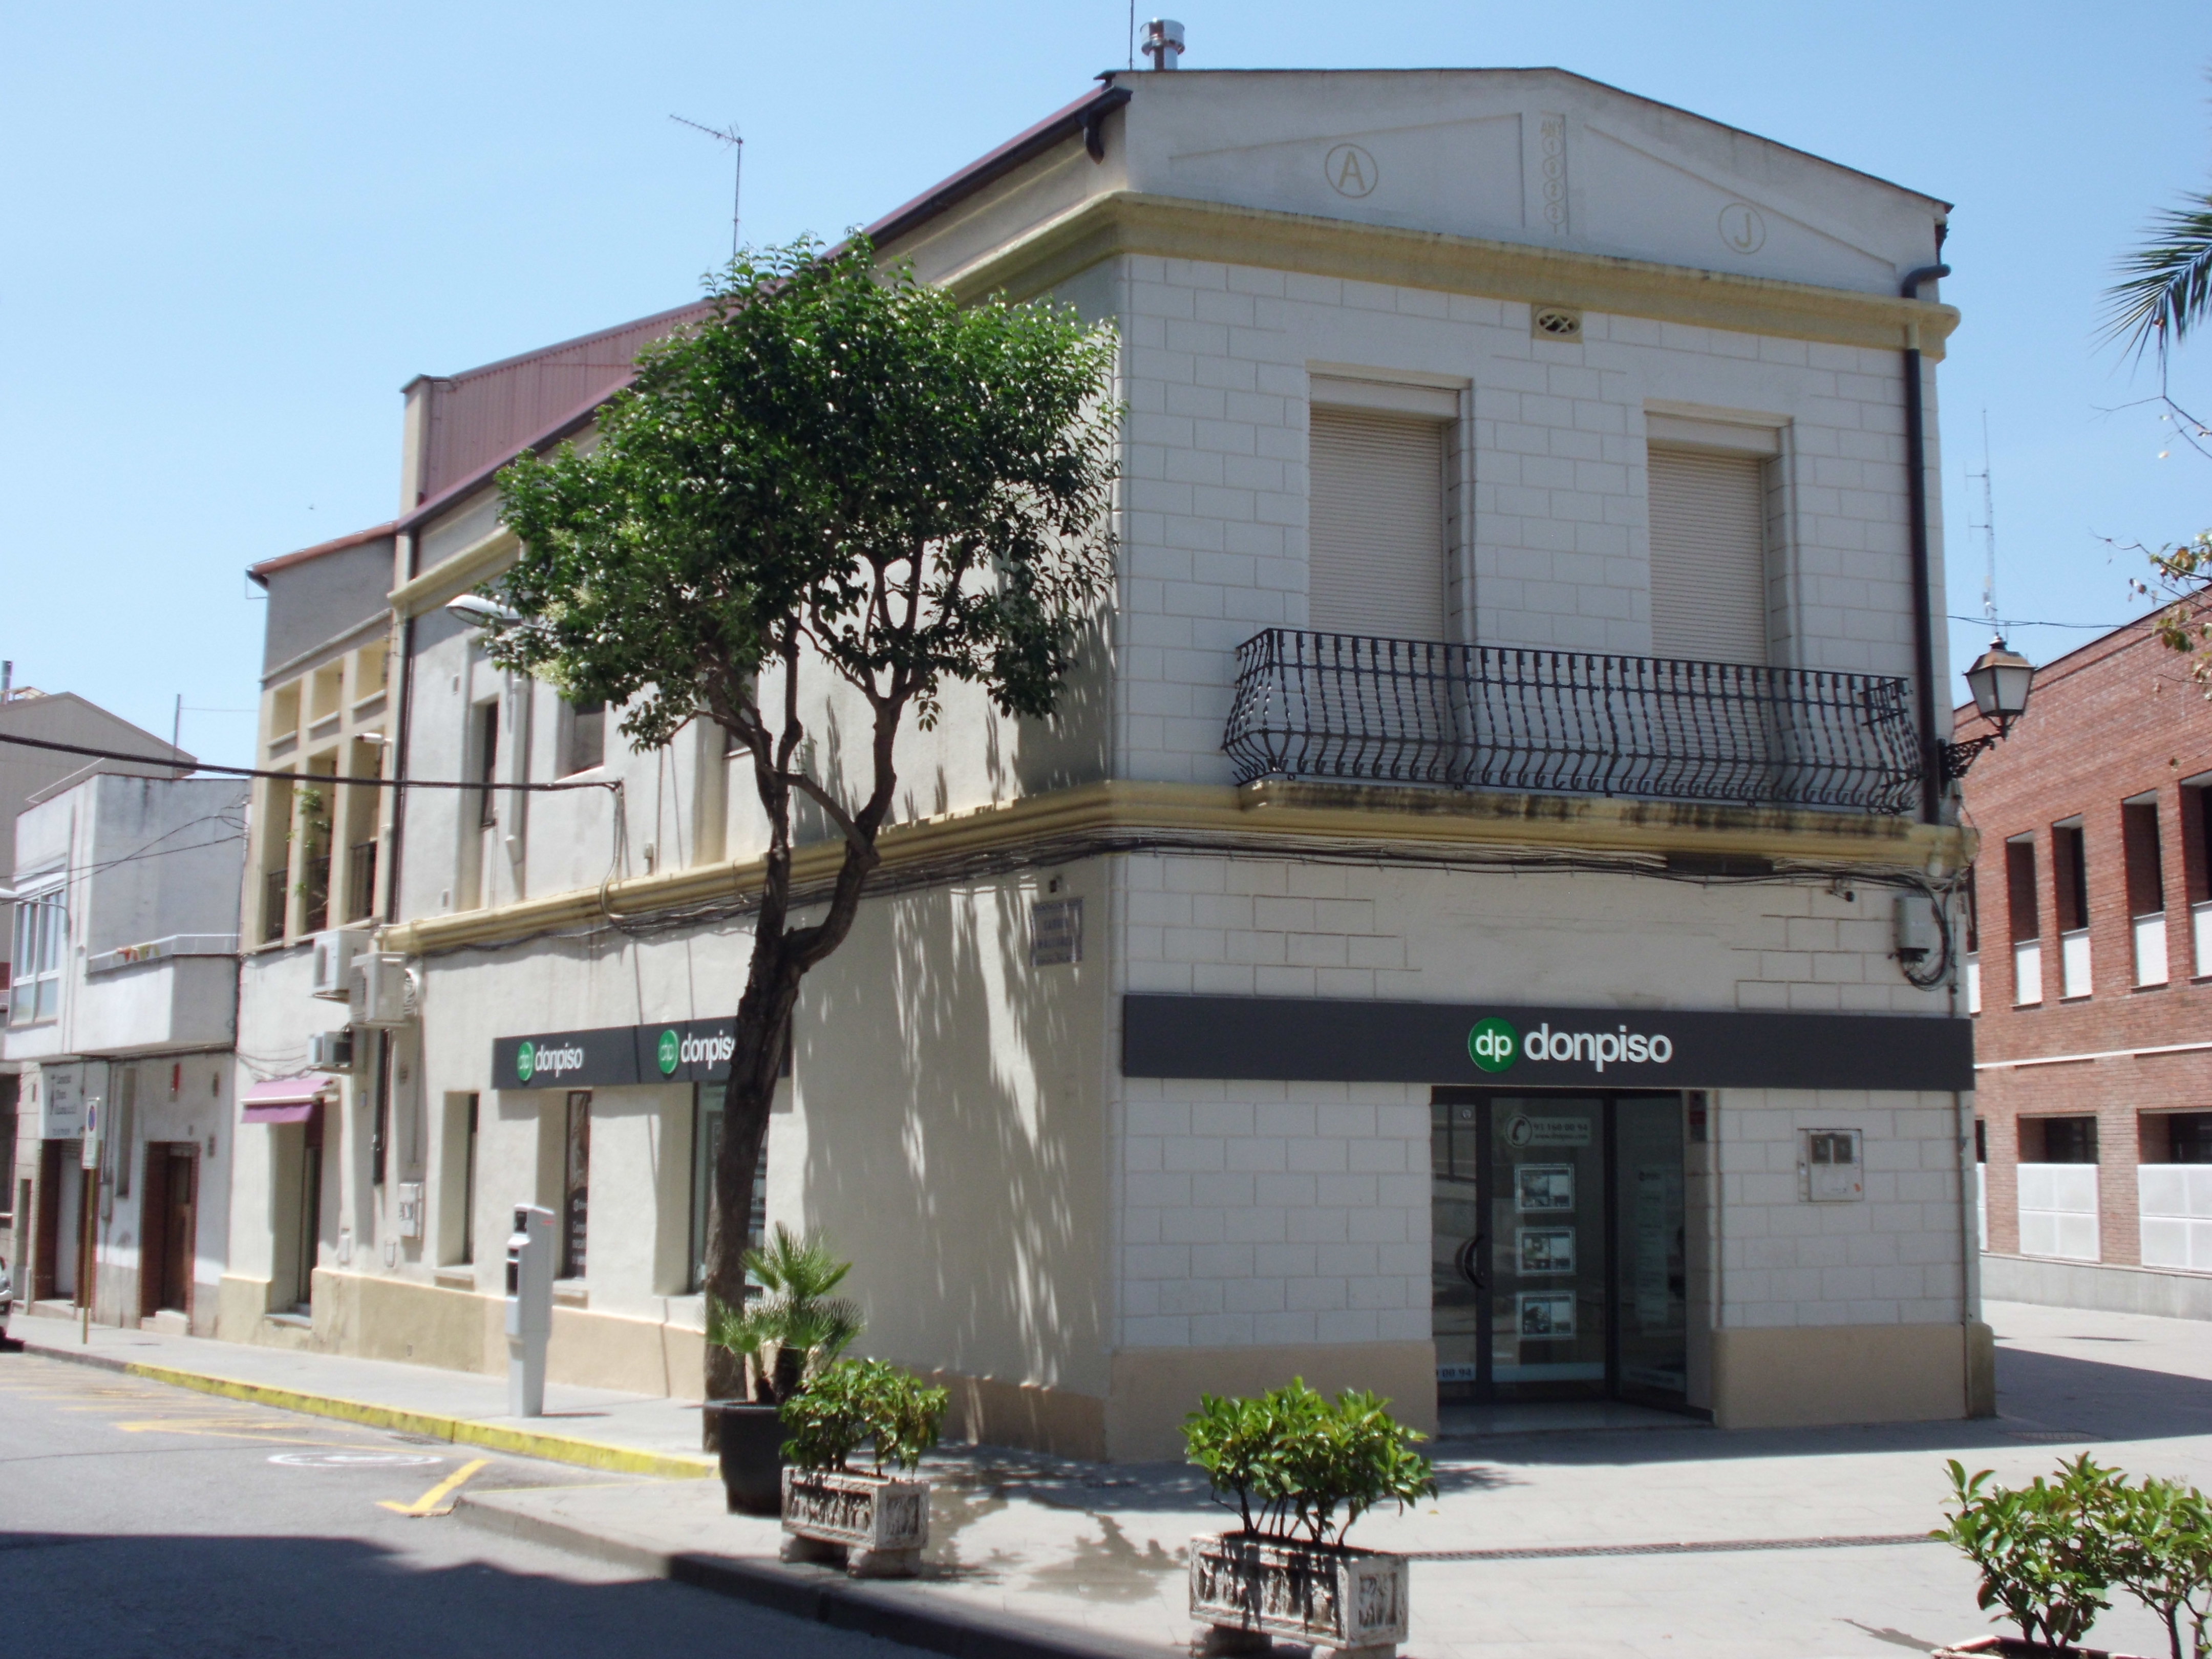 oficina donpiso Olesa de Montserrat